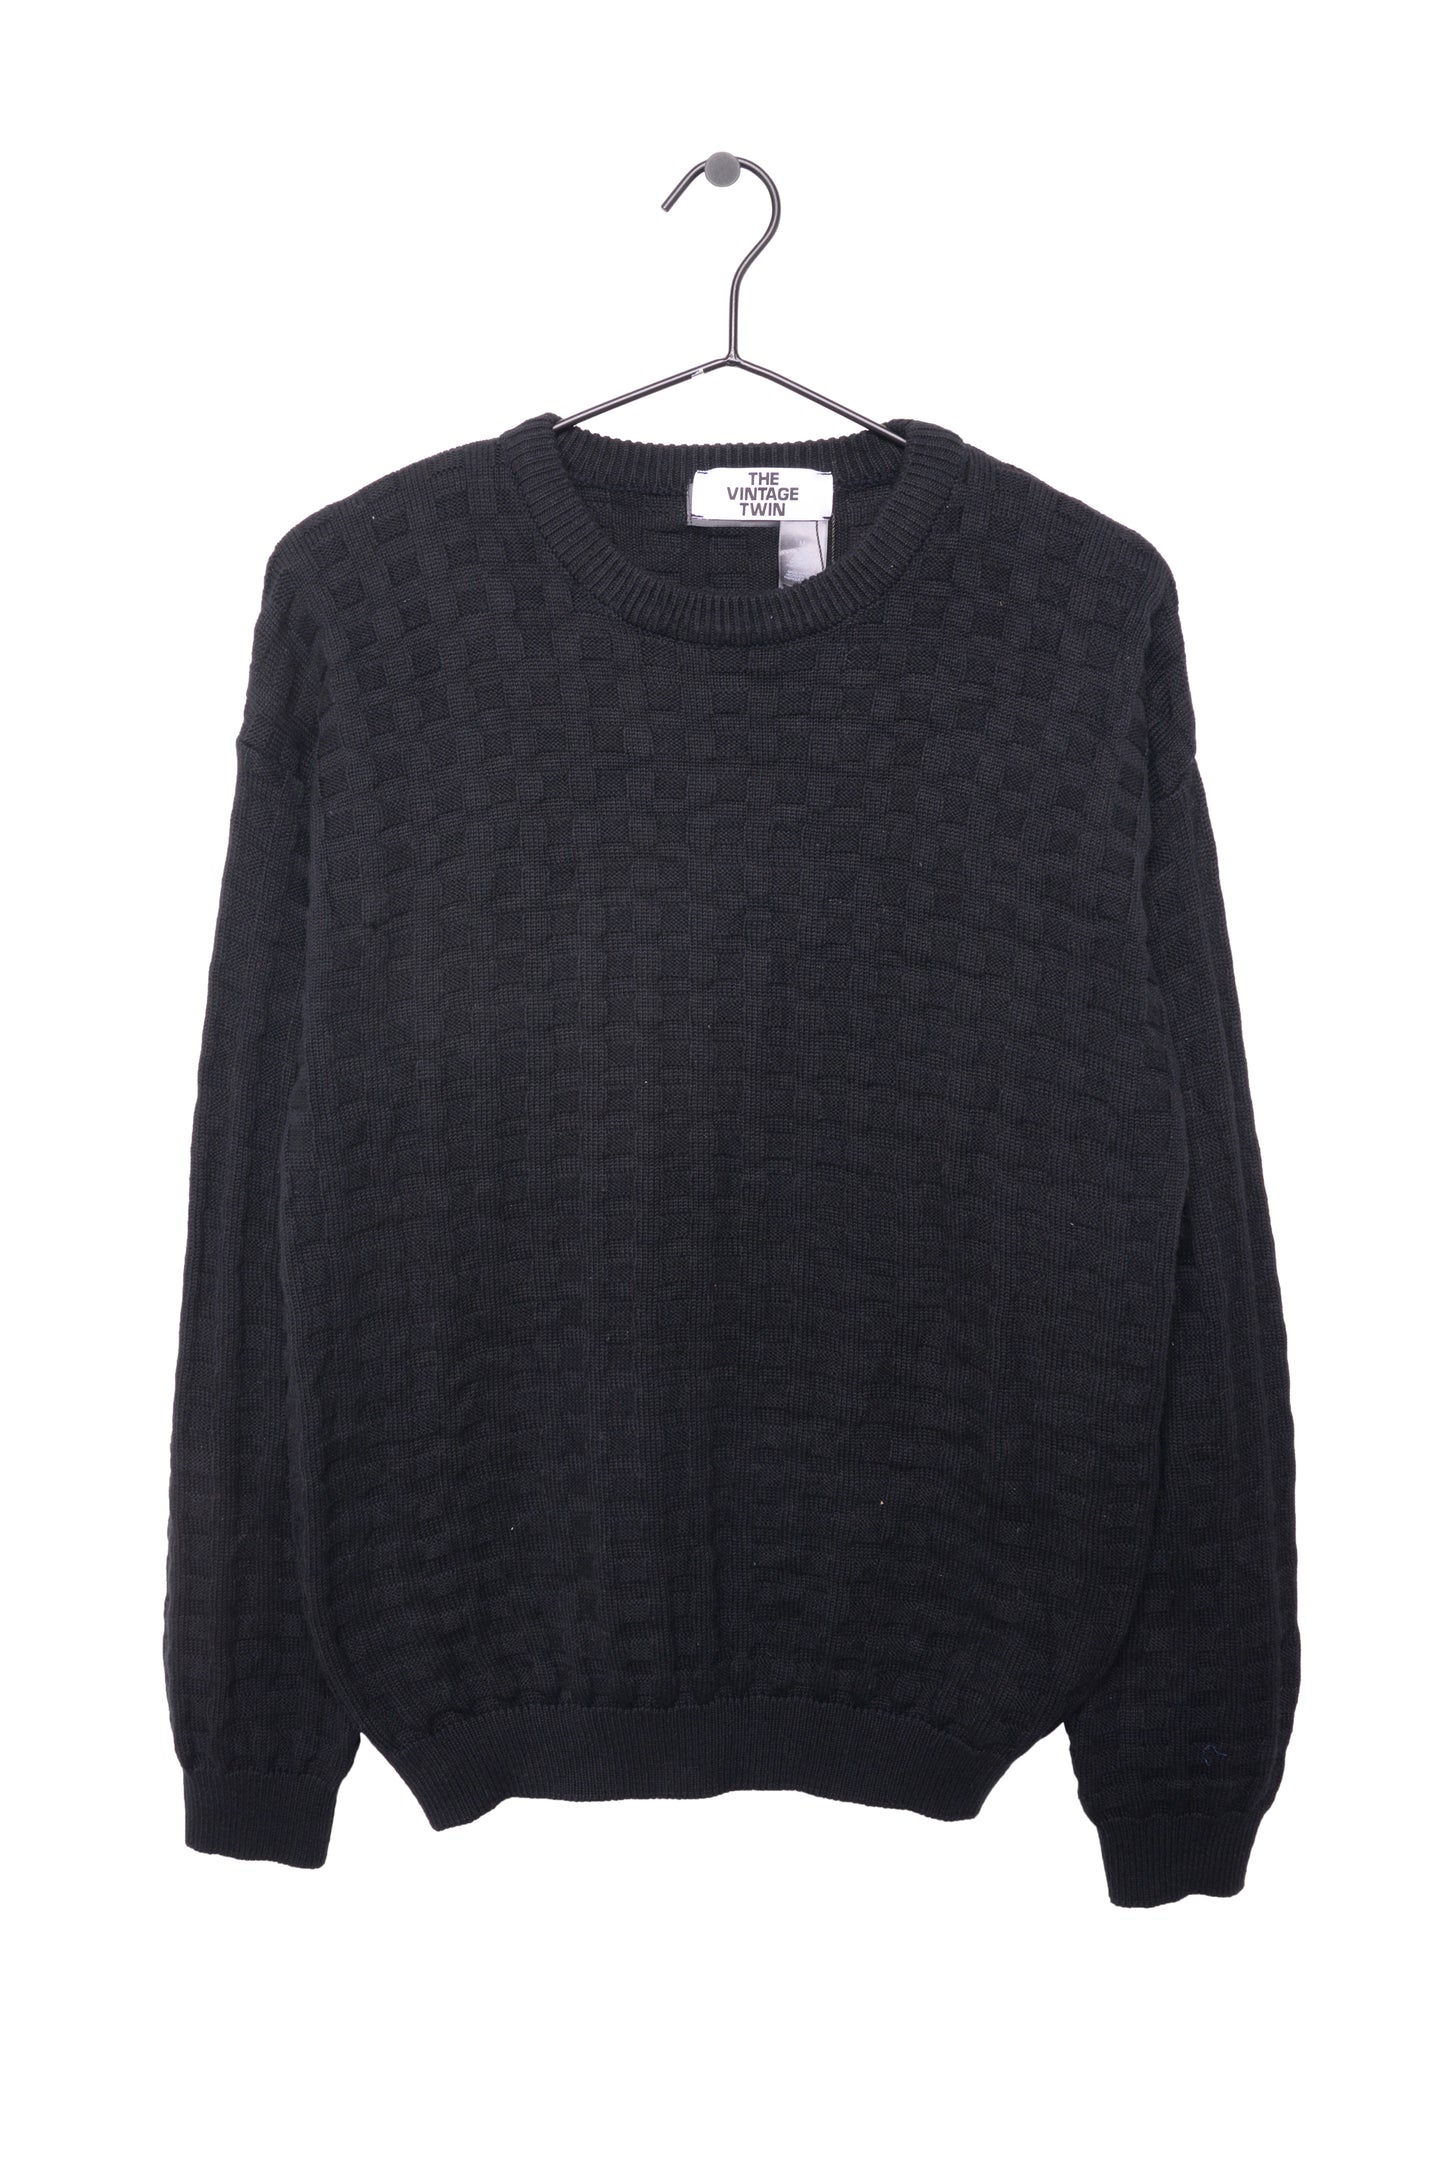 Textured Knit Black Sweater